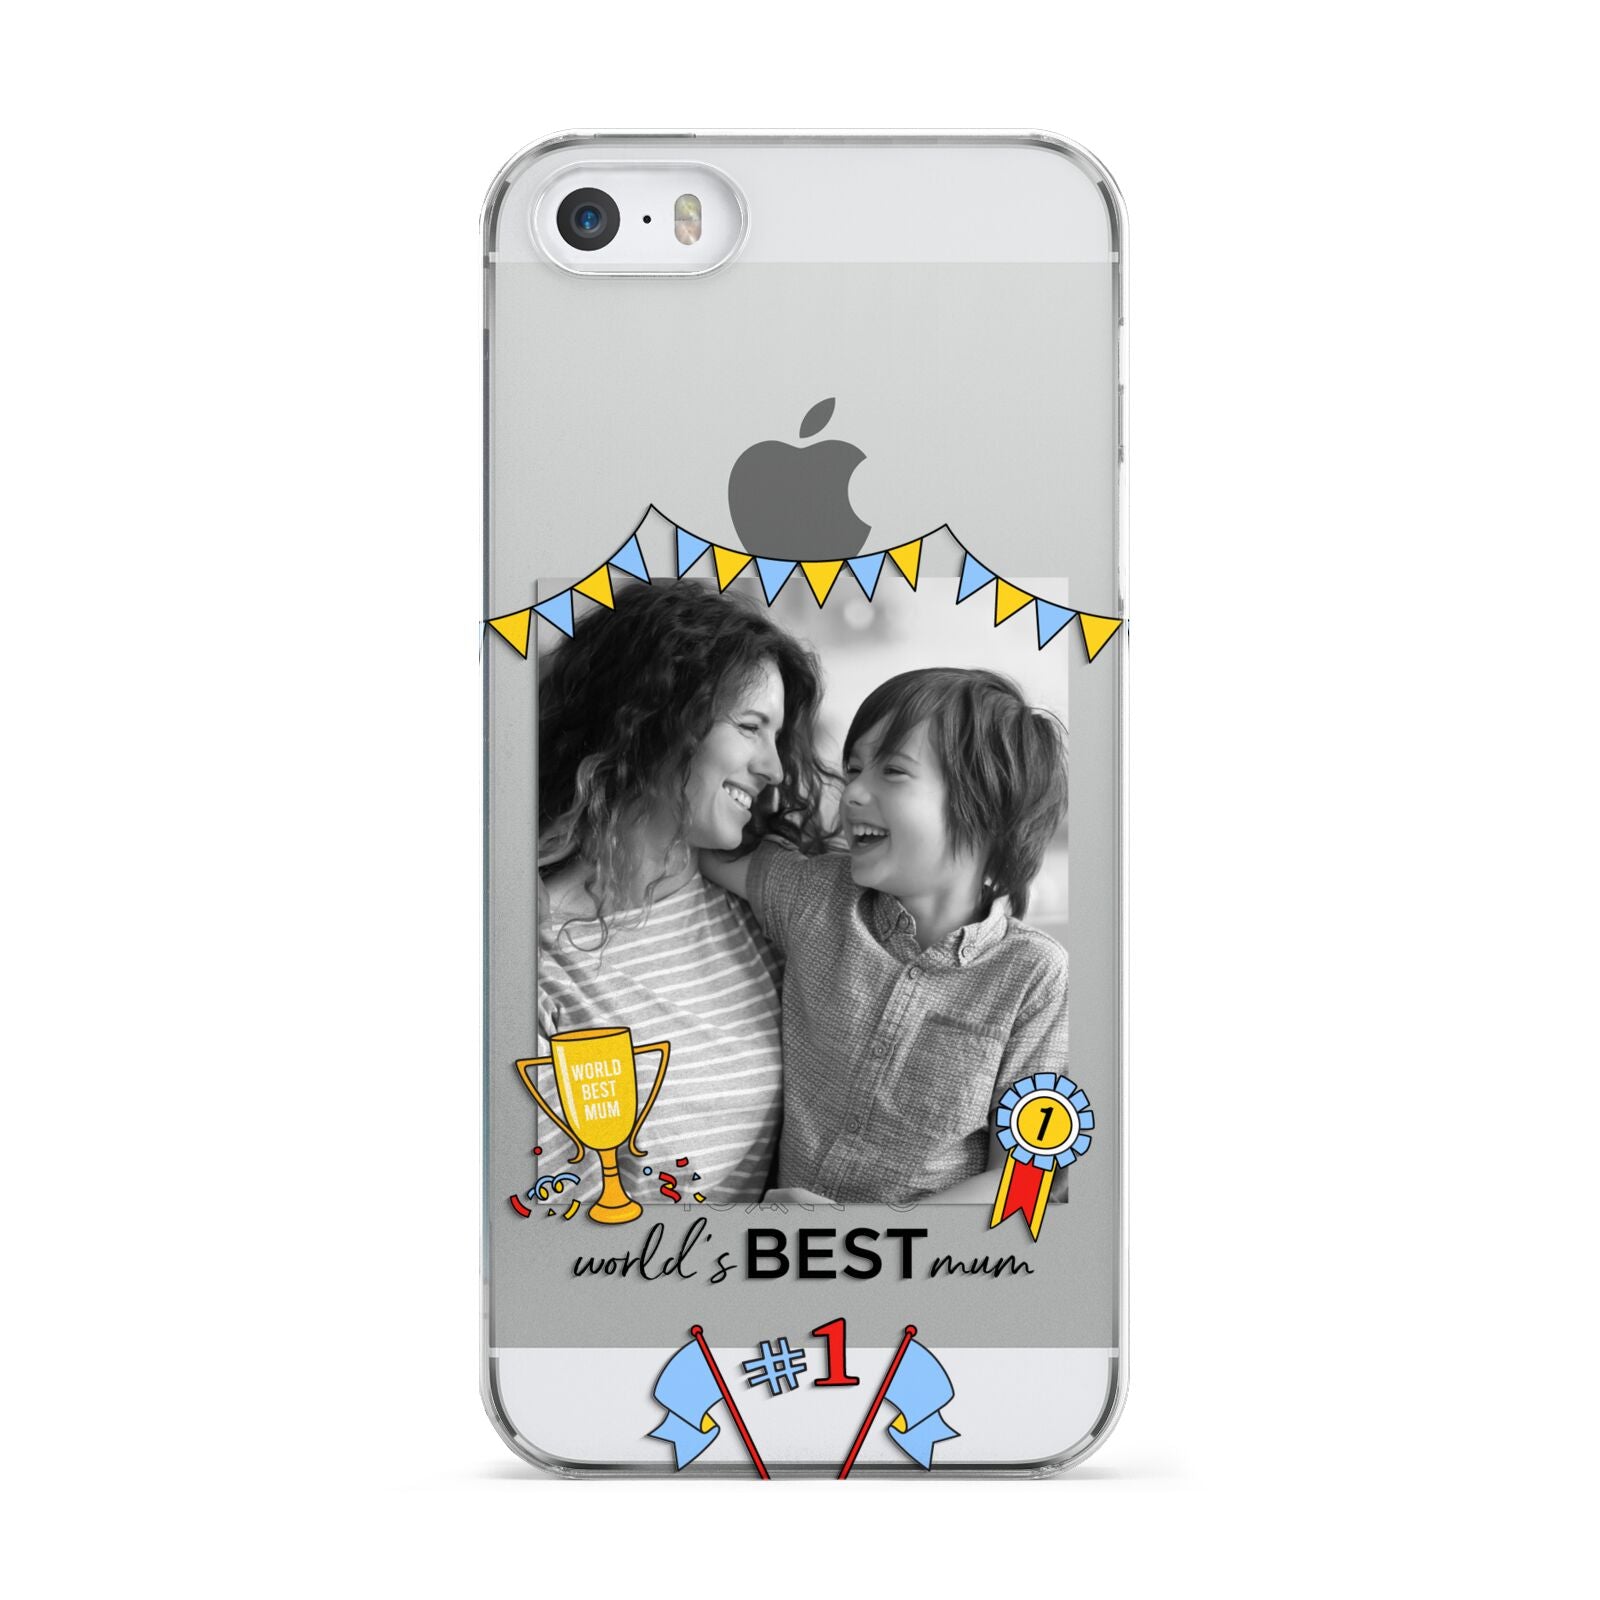 Worlds Best Mum Apple iPhone 5 Case